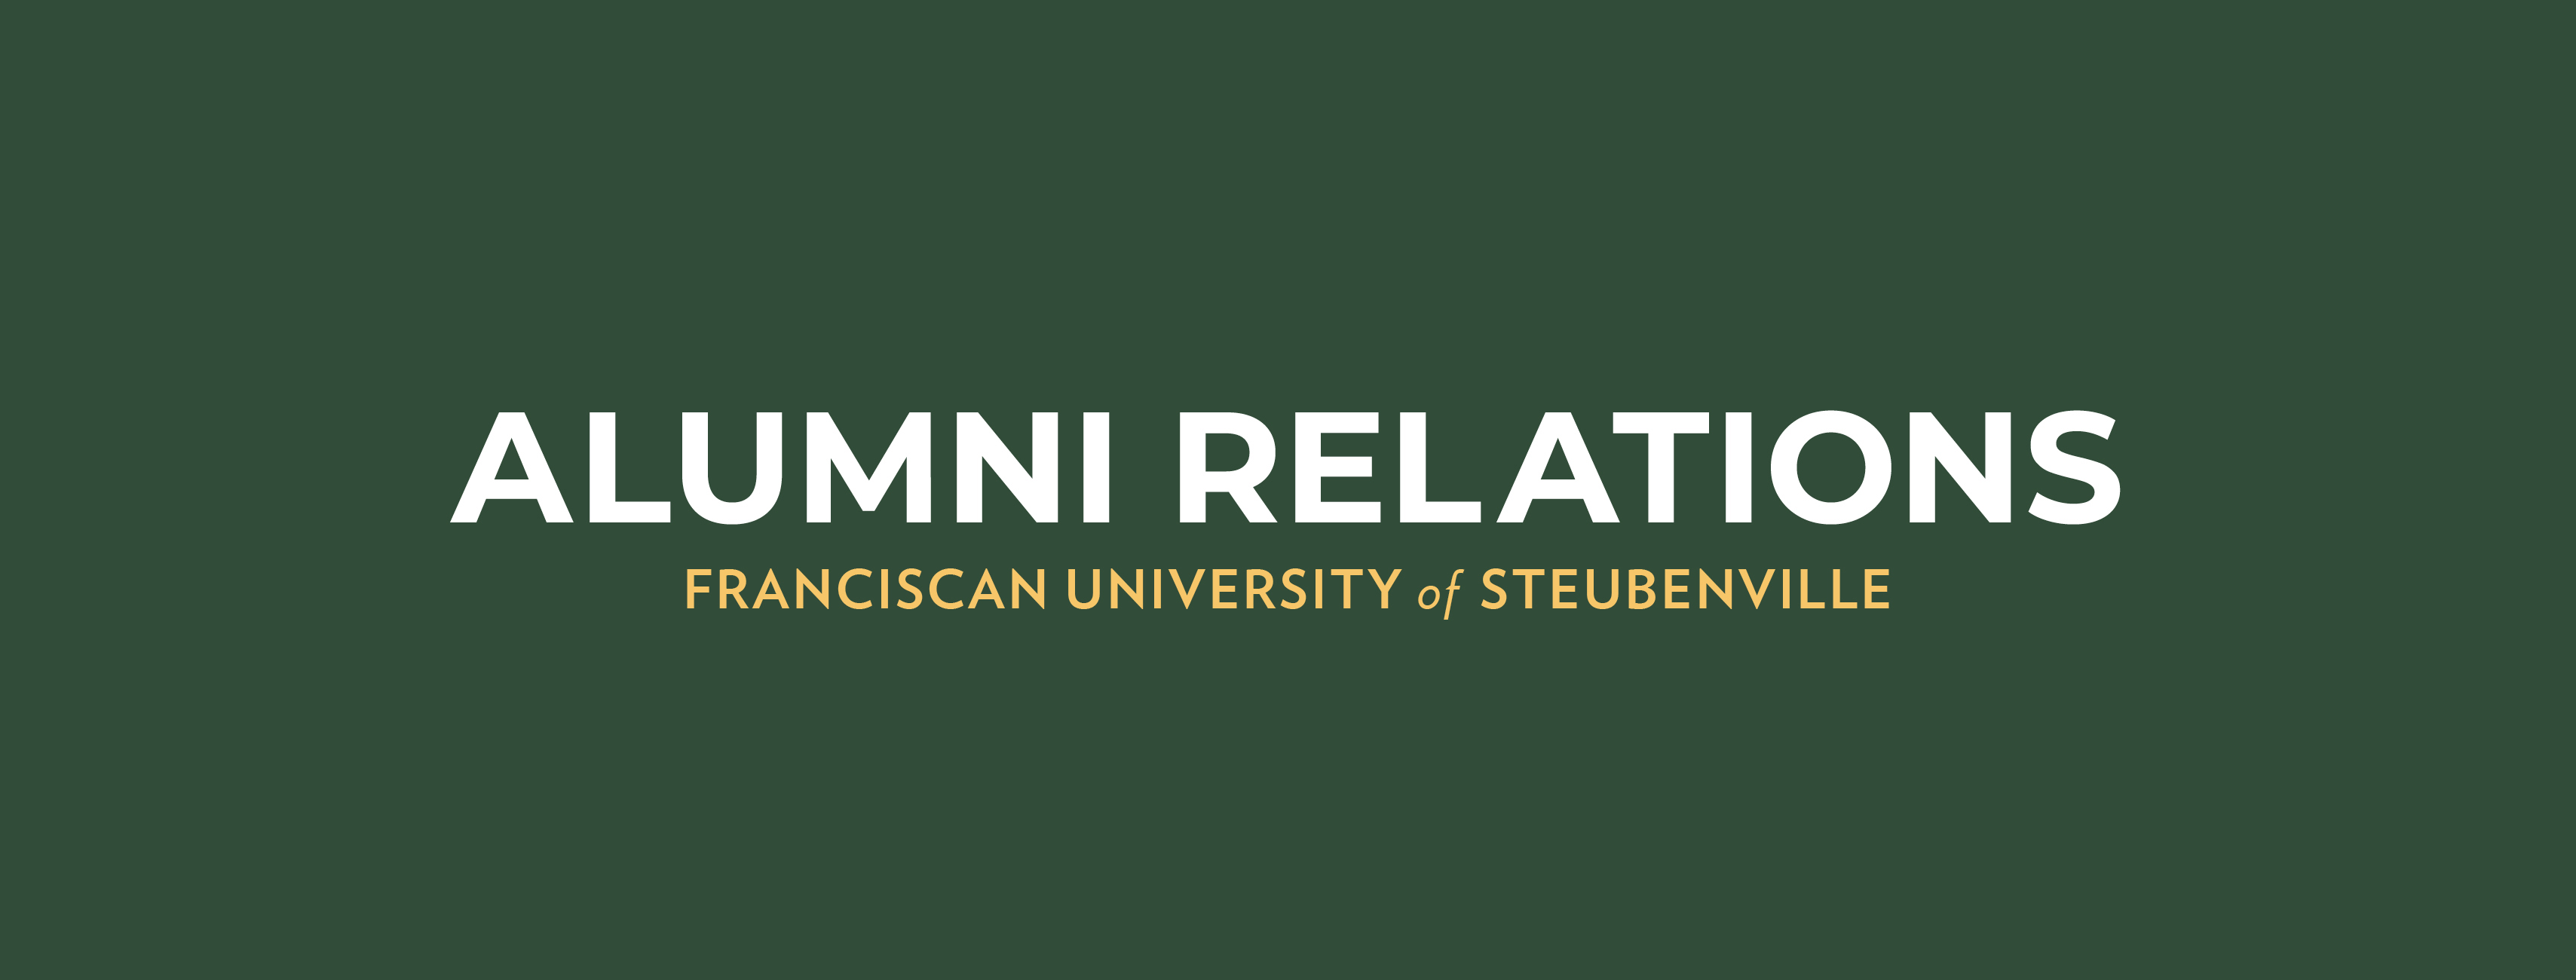 Alumni Relations logo